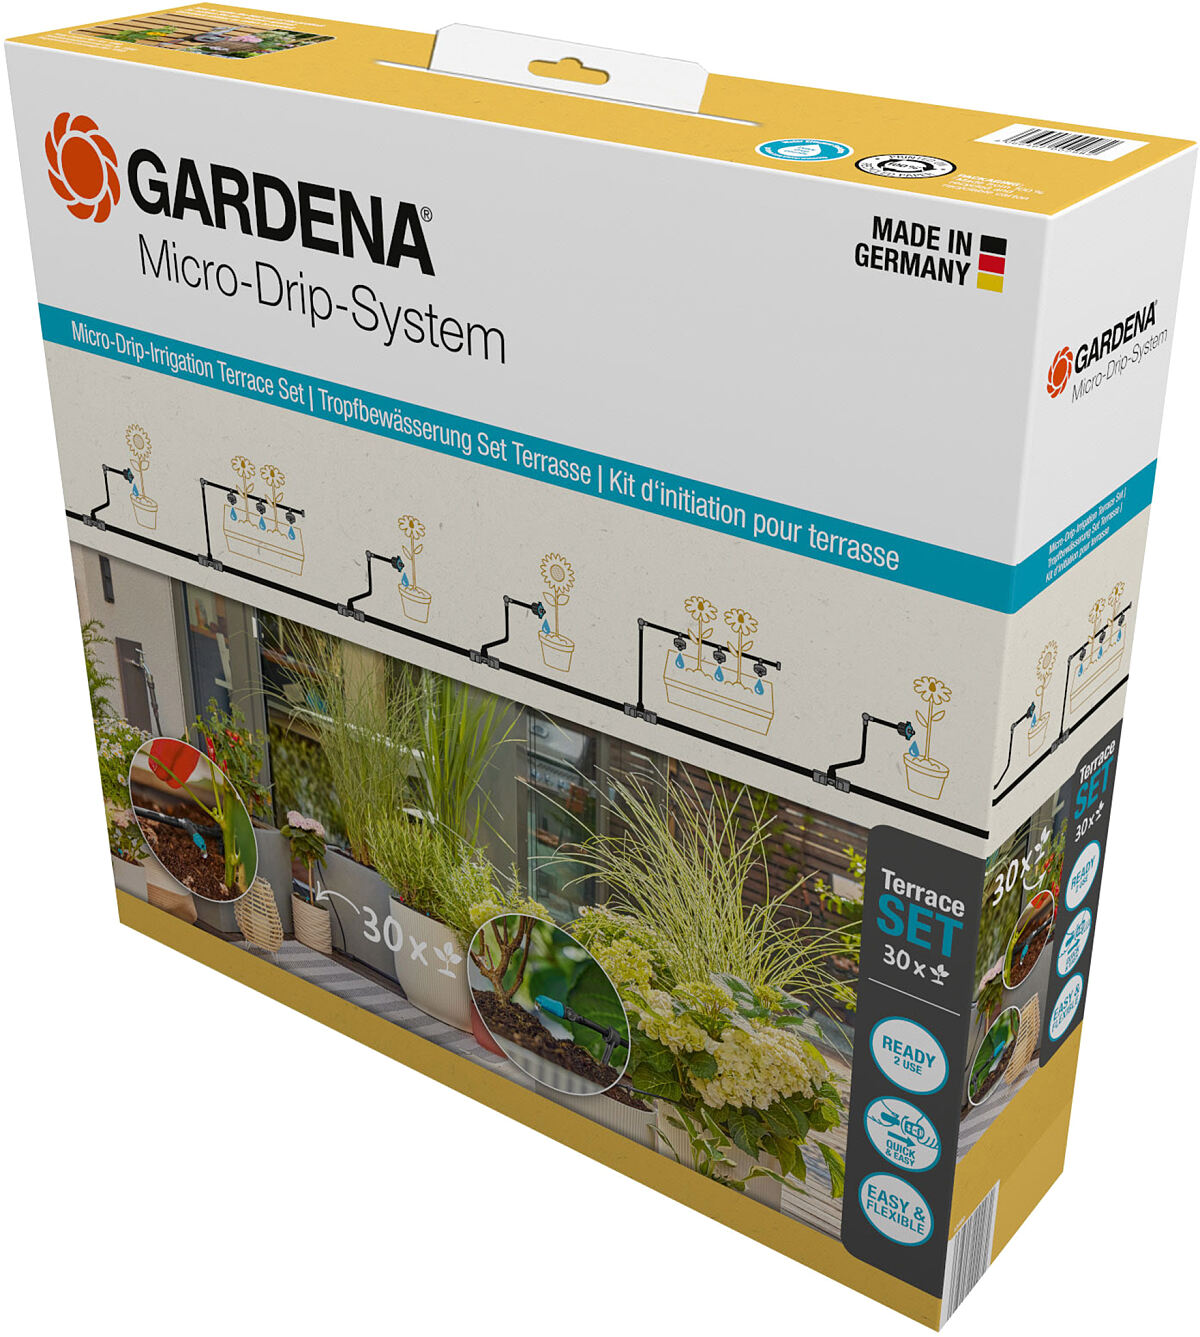 GARDENA Micro-Drip-Irrigation Terrace Set (30 plants)